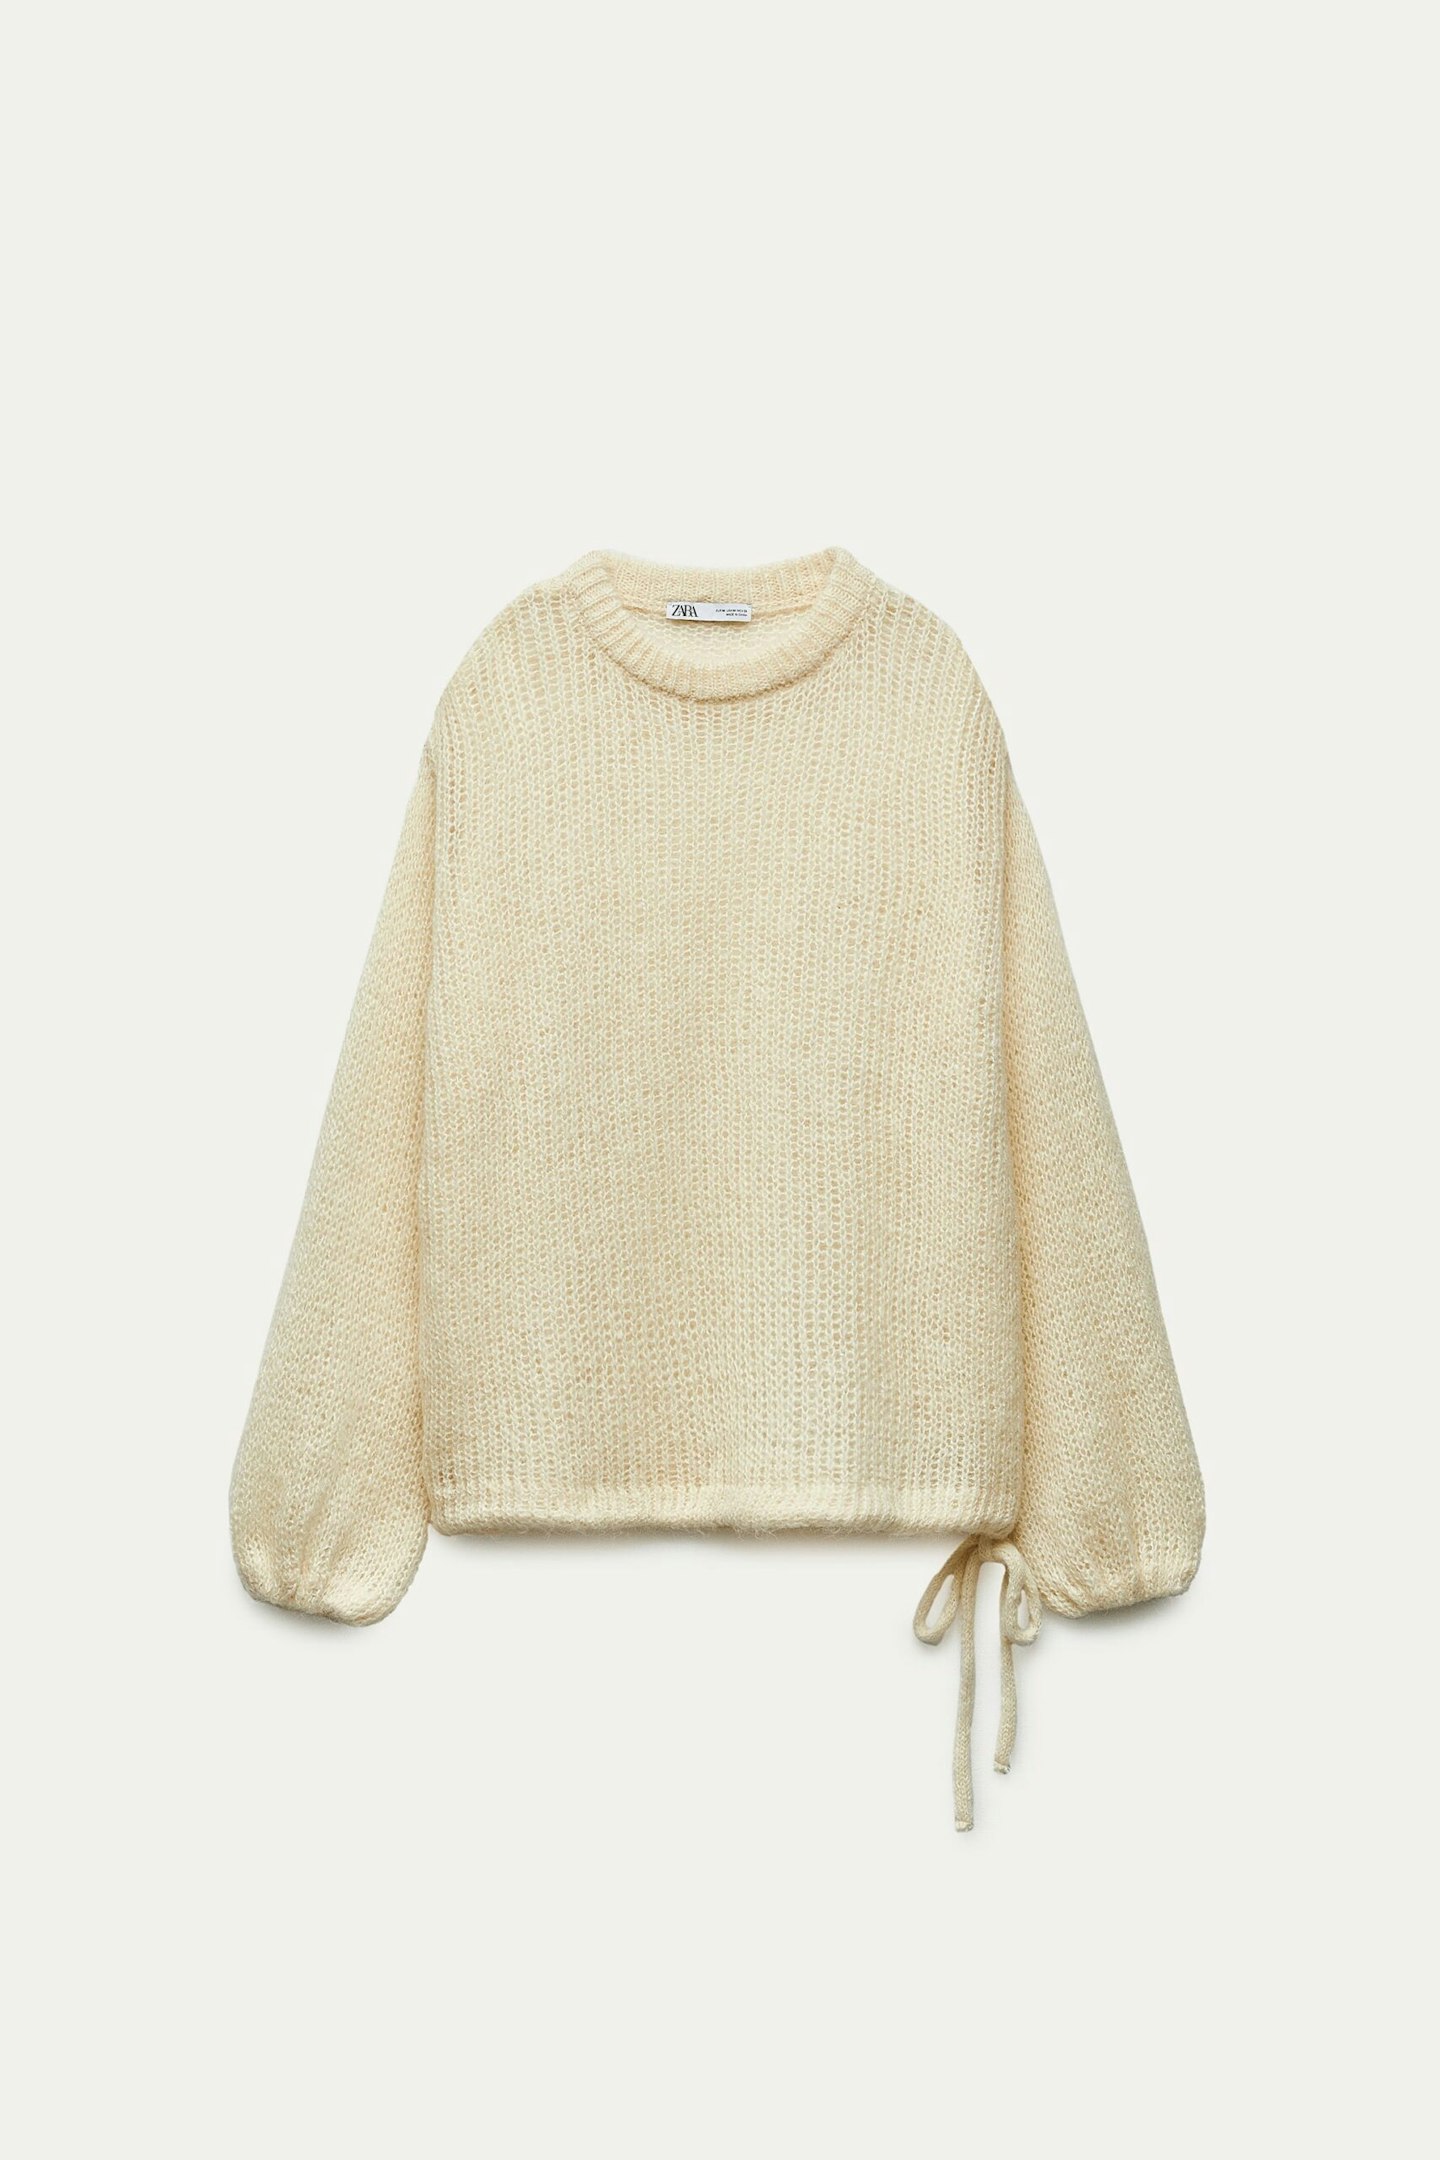 Zara, Wool And Alpaca-Blend Knit Sweater With Drawstring Hem